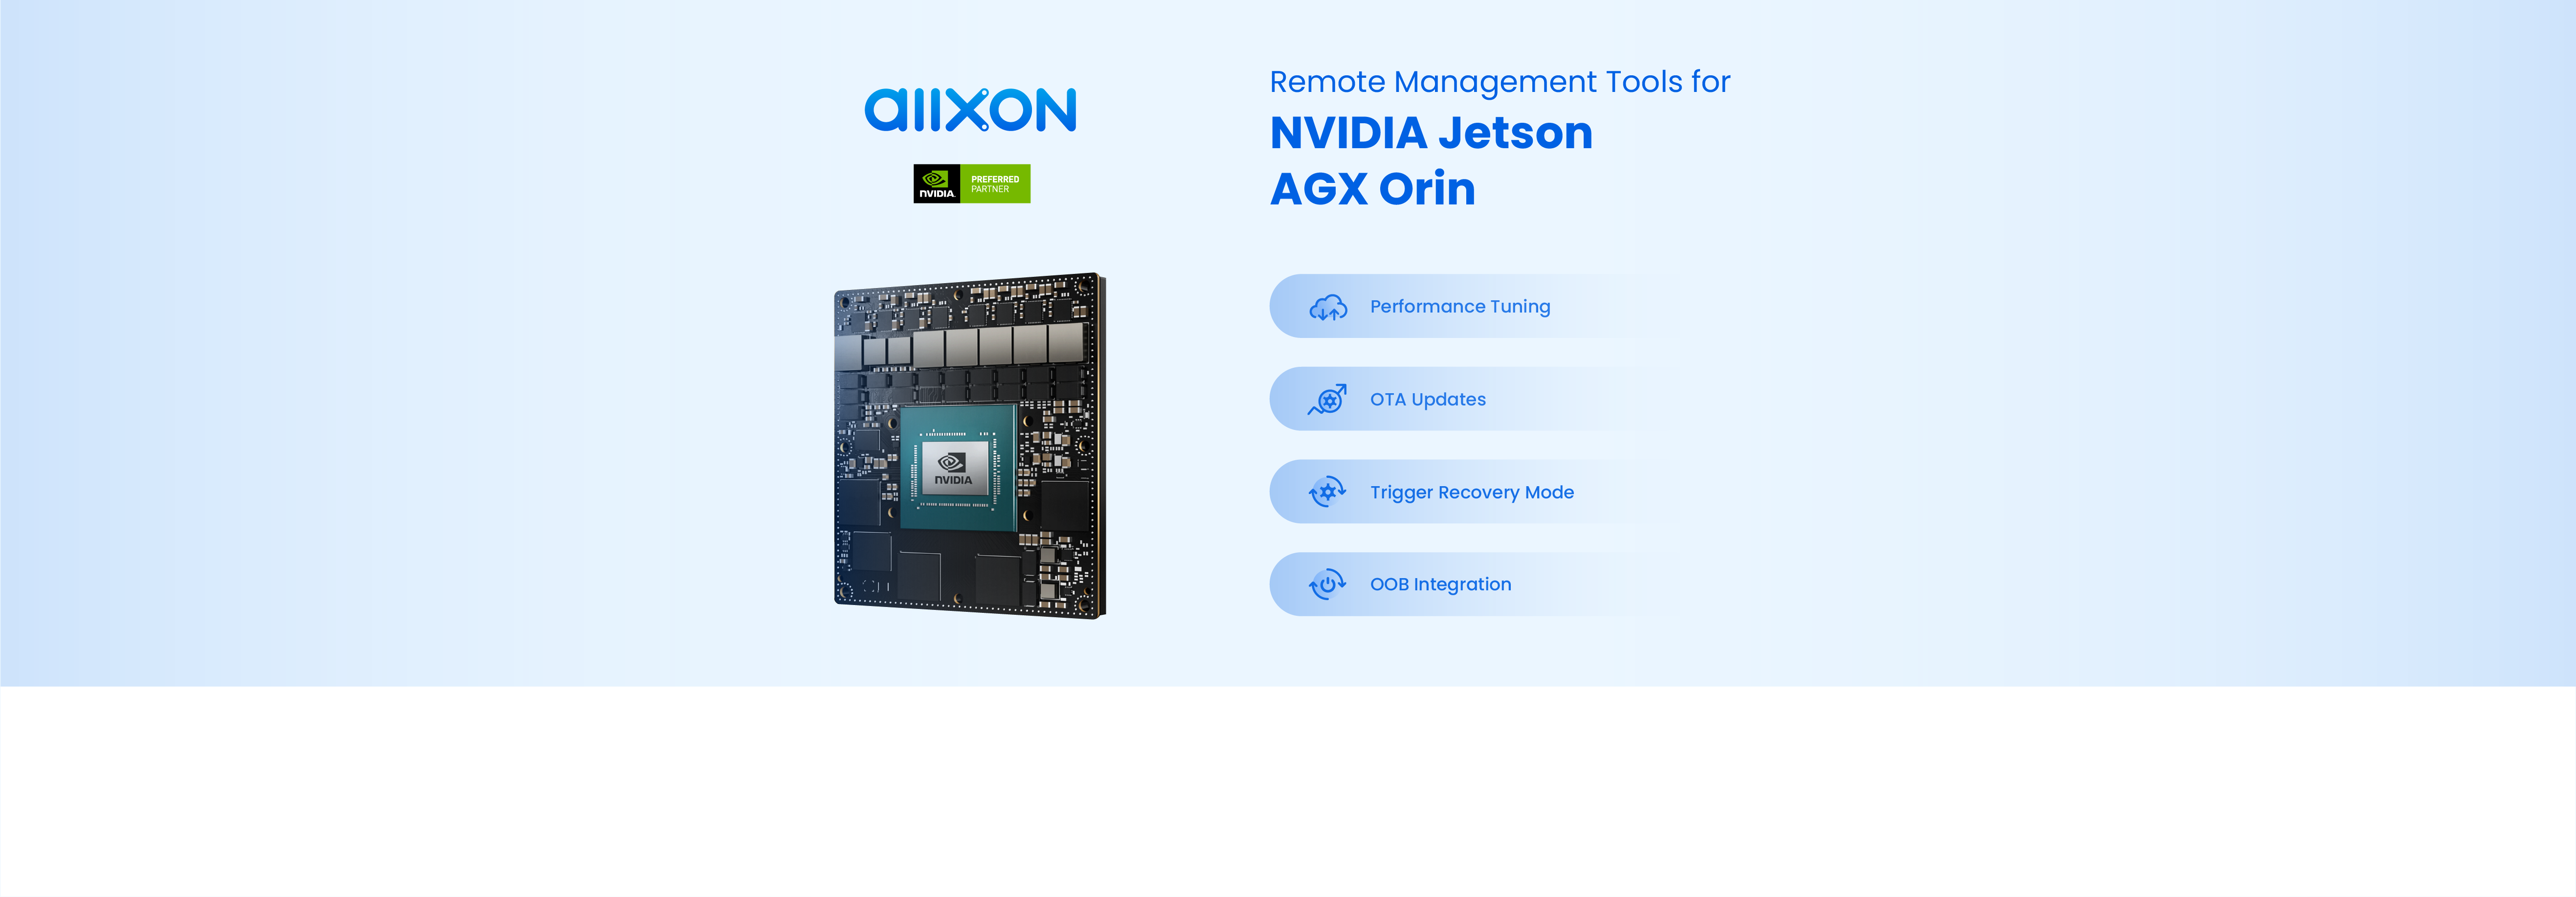 Allxon_Remote Management Tools for NVIDIA Jetson AGX Orin_1264x440